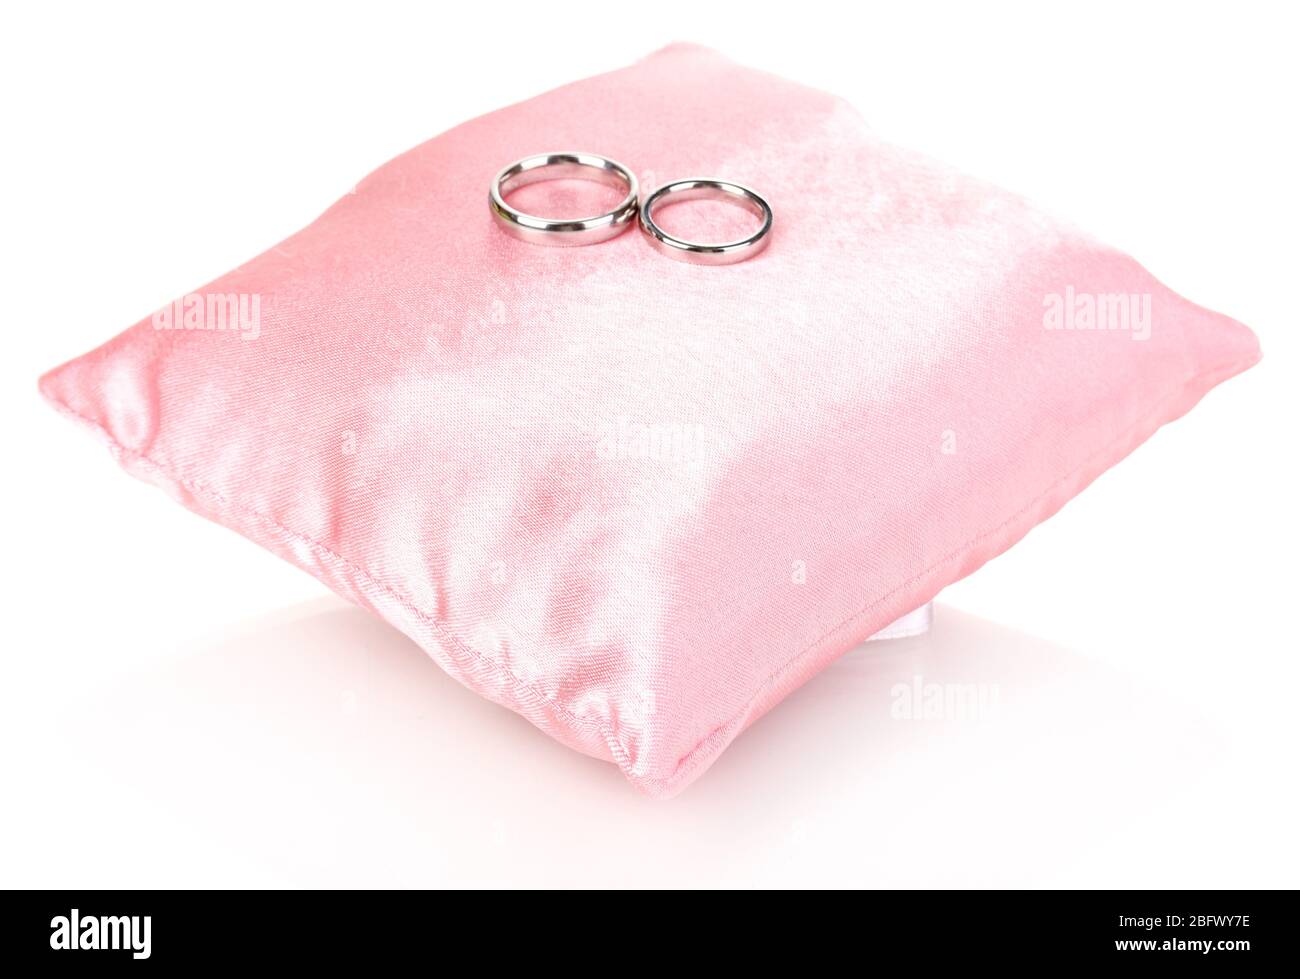 Wedding rings on satin pillow isolated on white Stock Photo